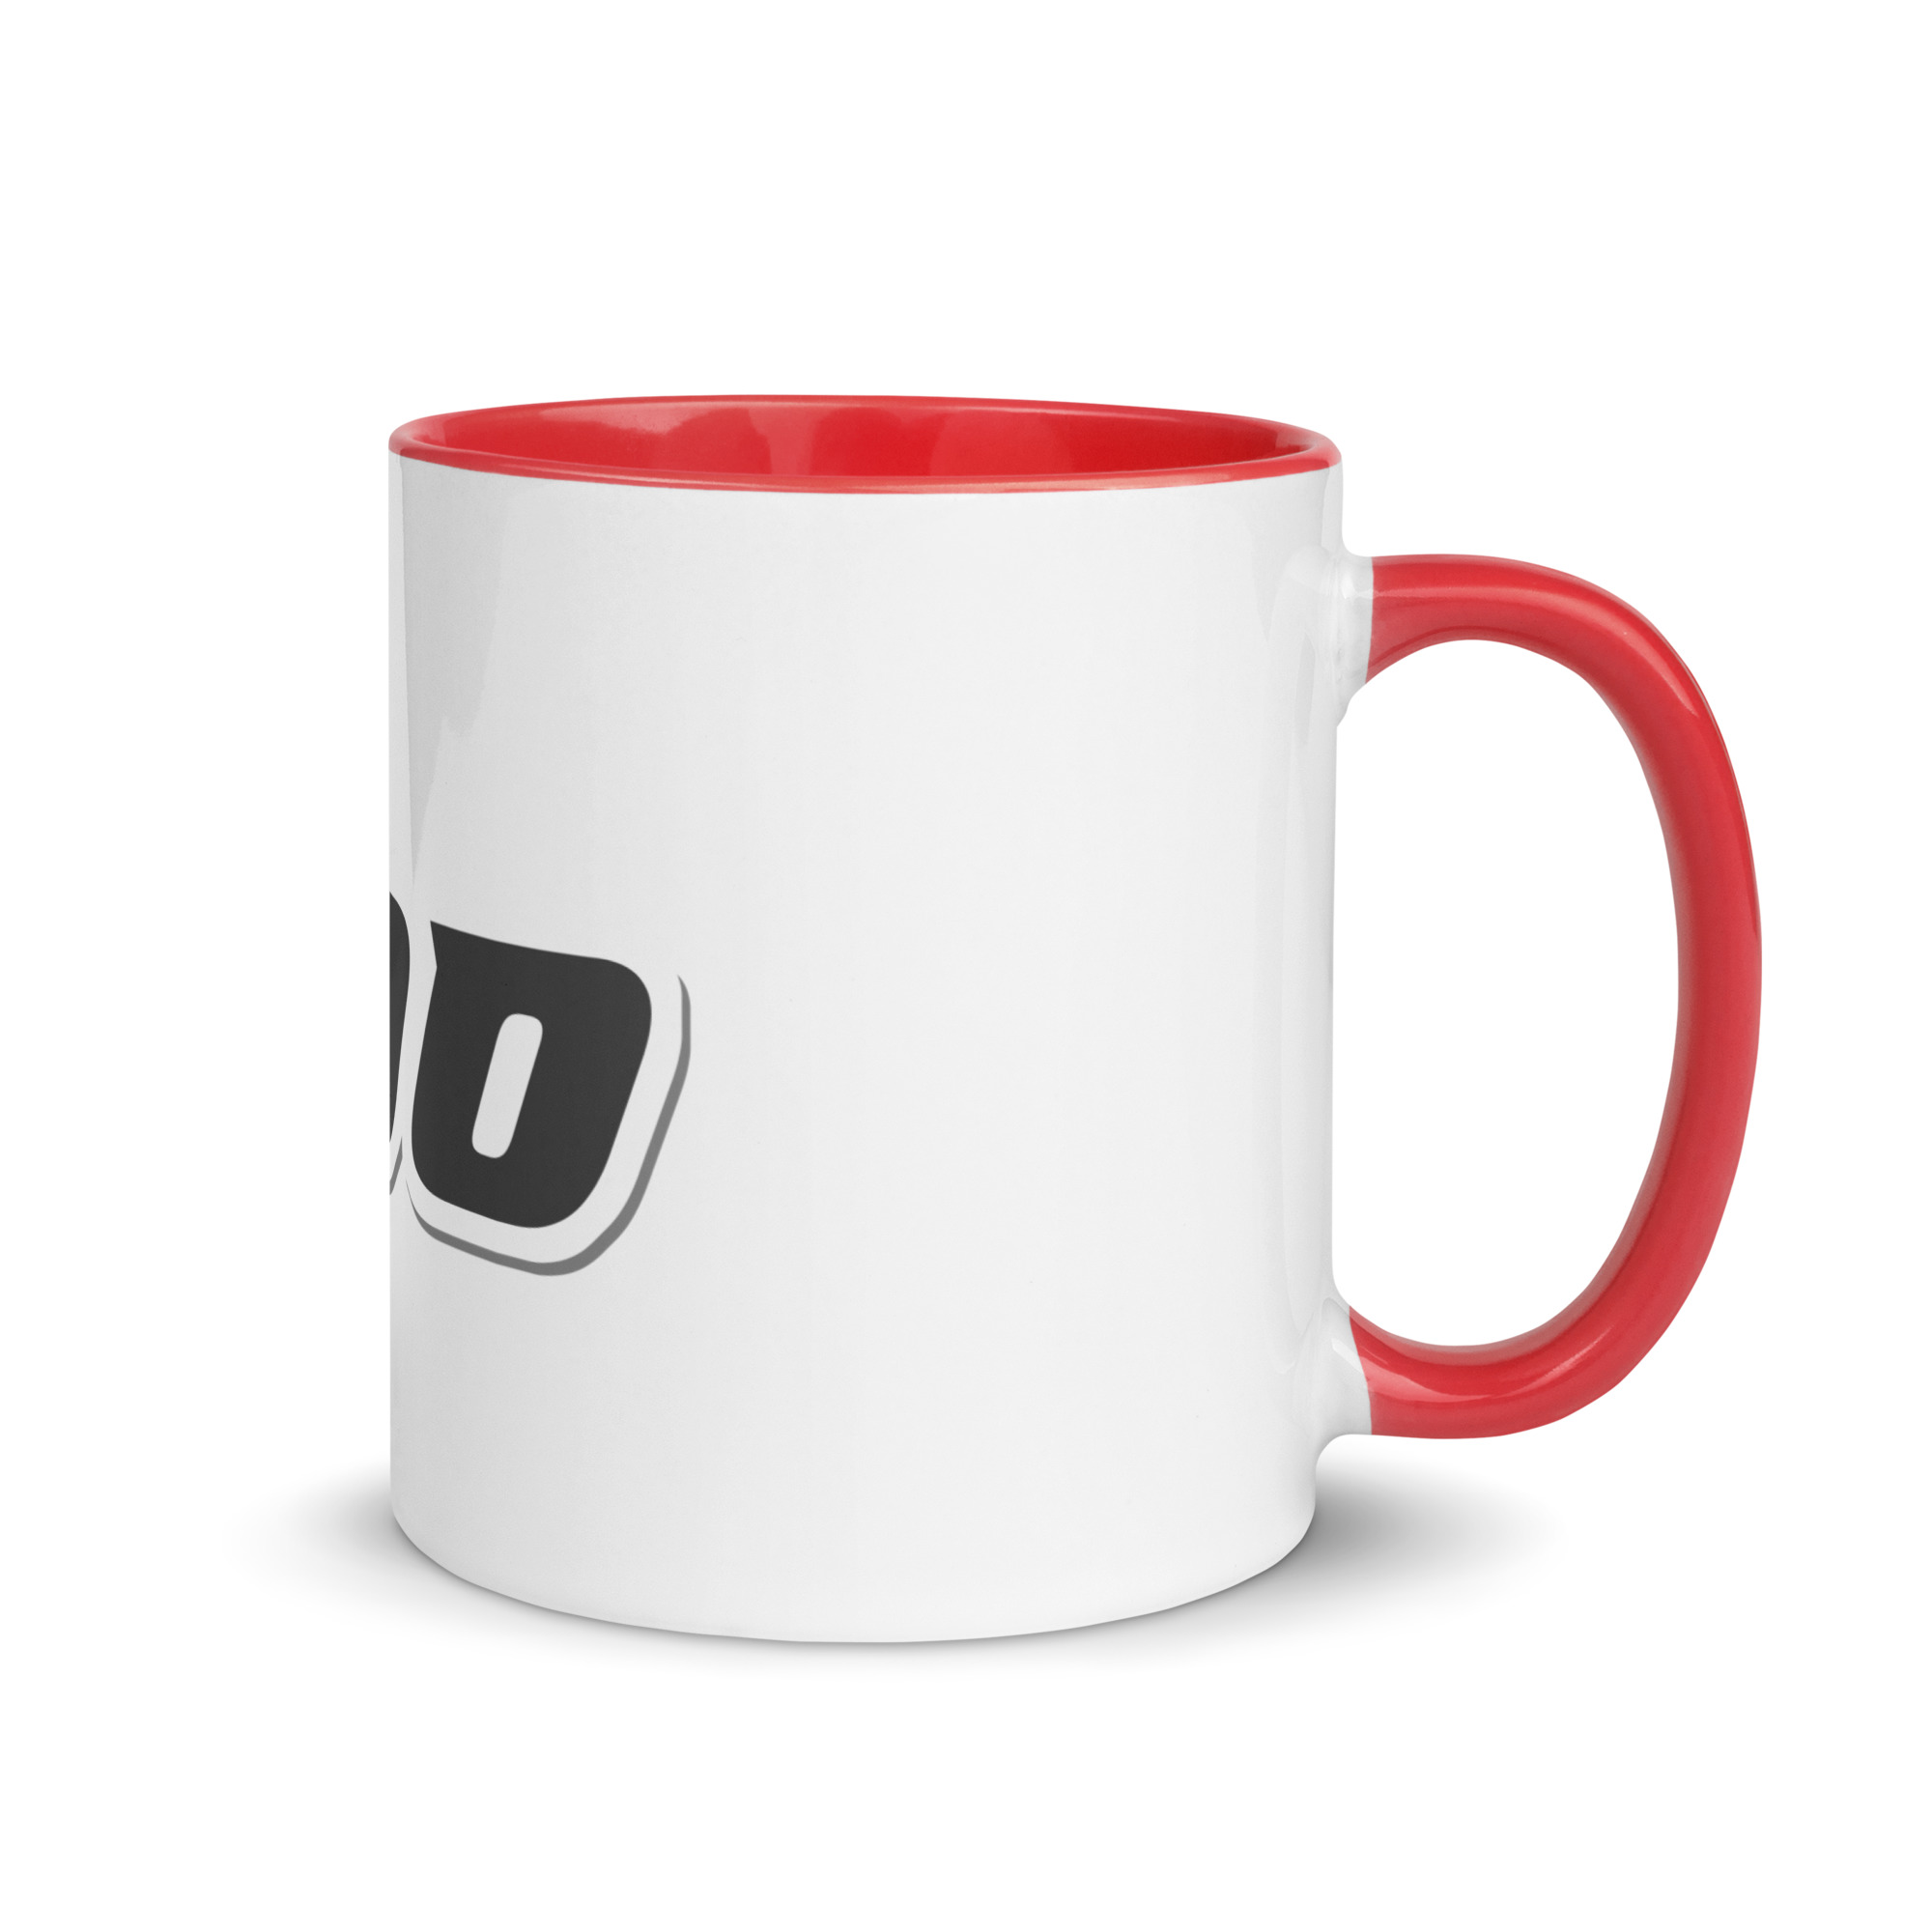 white-ceramic-mug-with-color-inside-red-11-oz-right-6525b6484c1c7.jpg